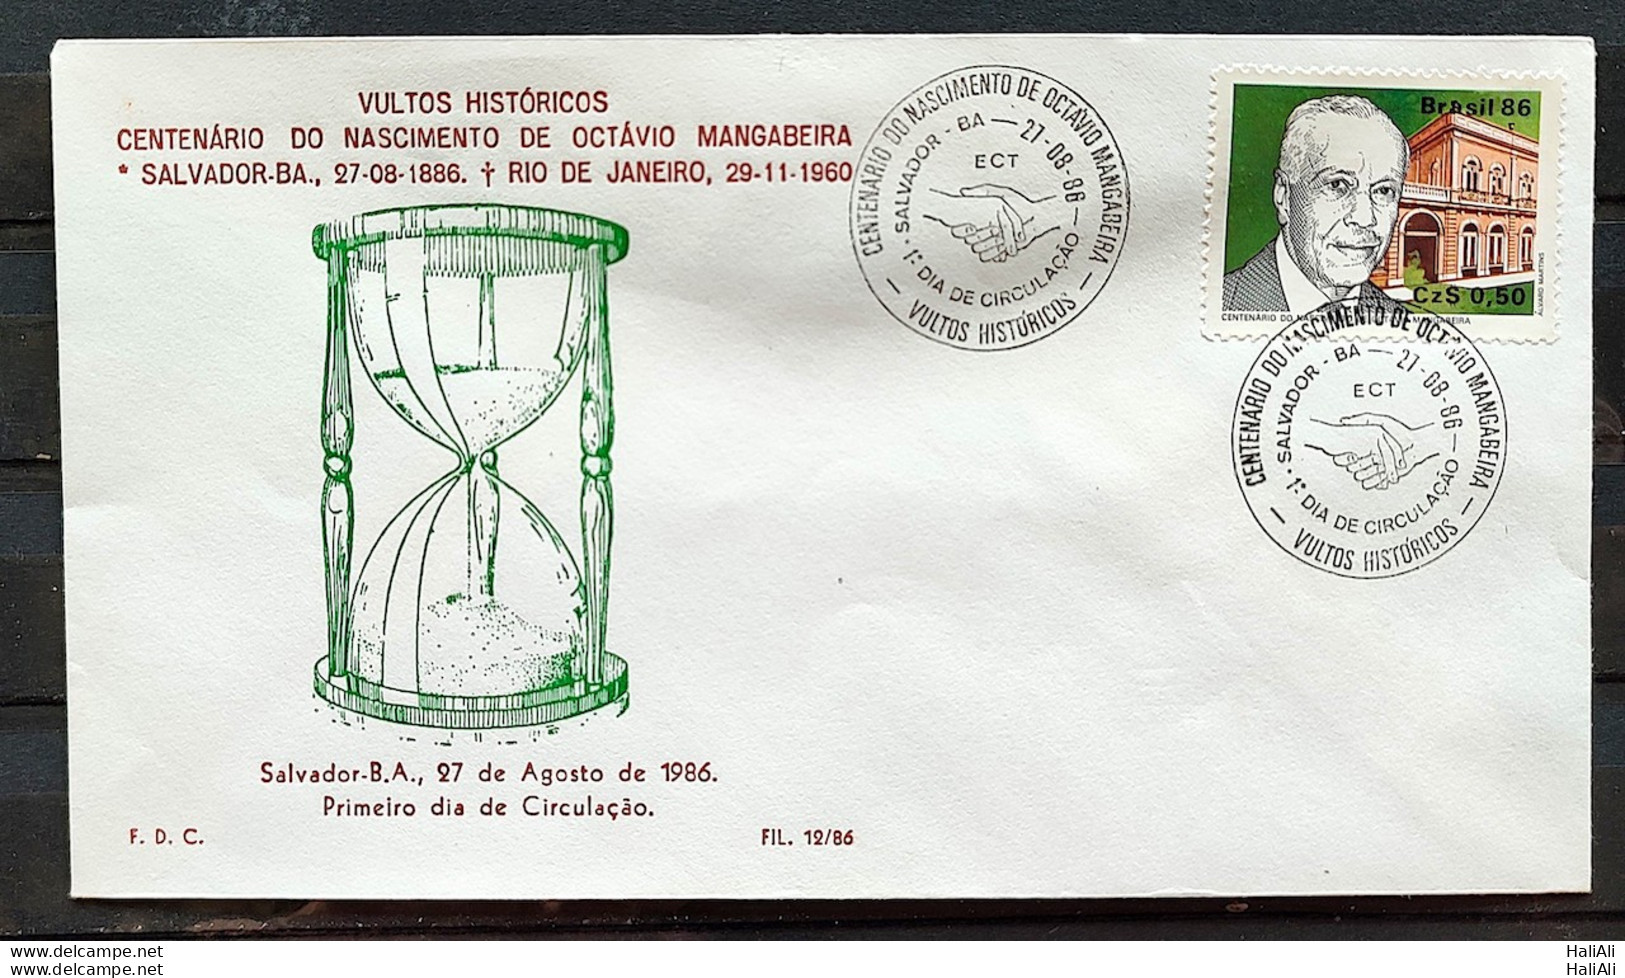 Brazil Envelope PVT FIL 012 1986 Octavio Mangabeira Political Journalism CBC BA - FDC